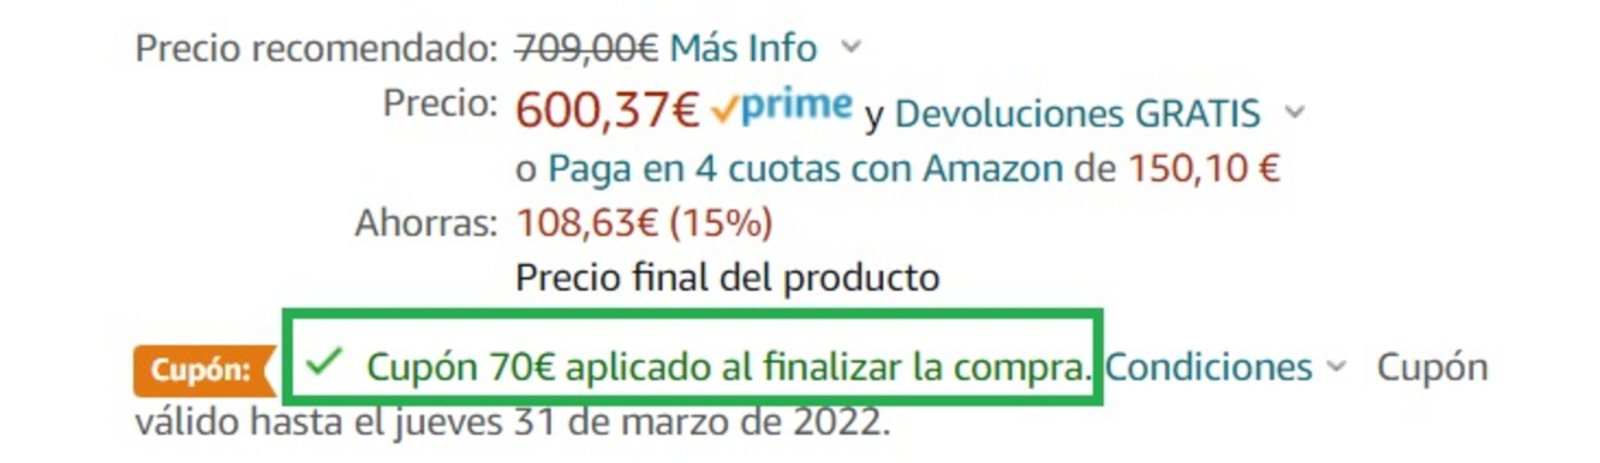 cupon OnePlus 9 Amazon